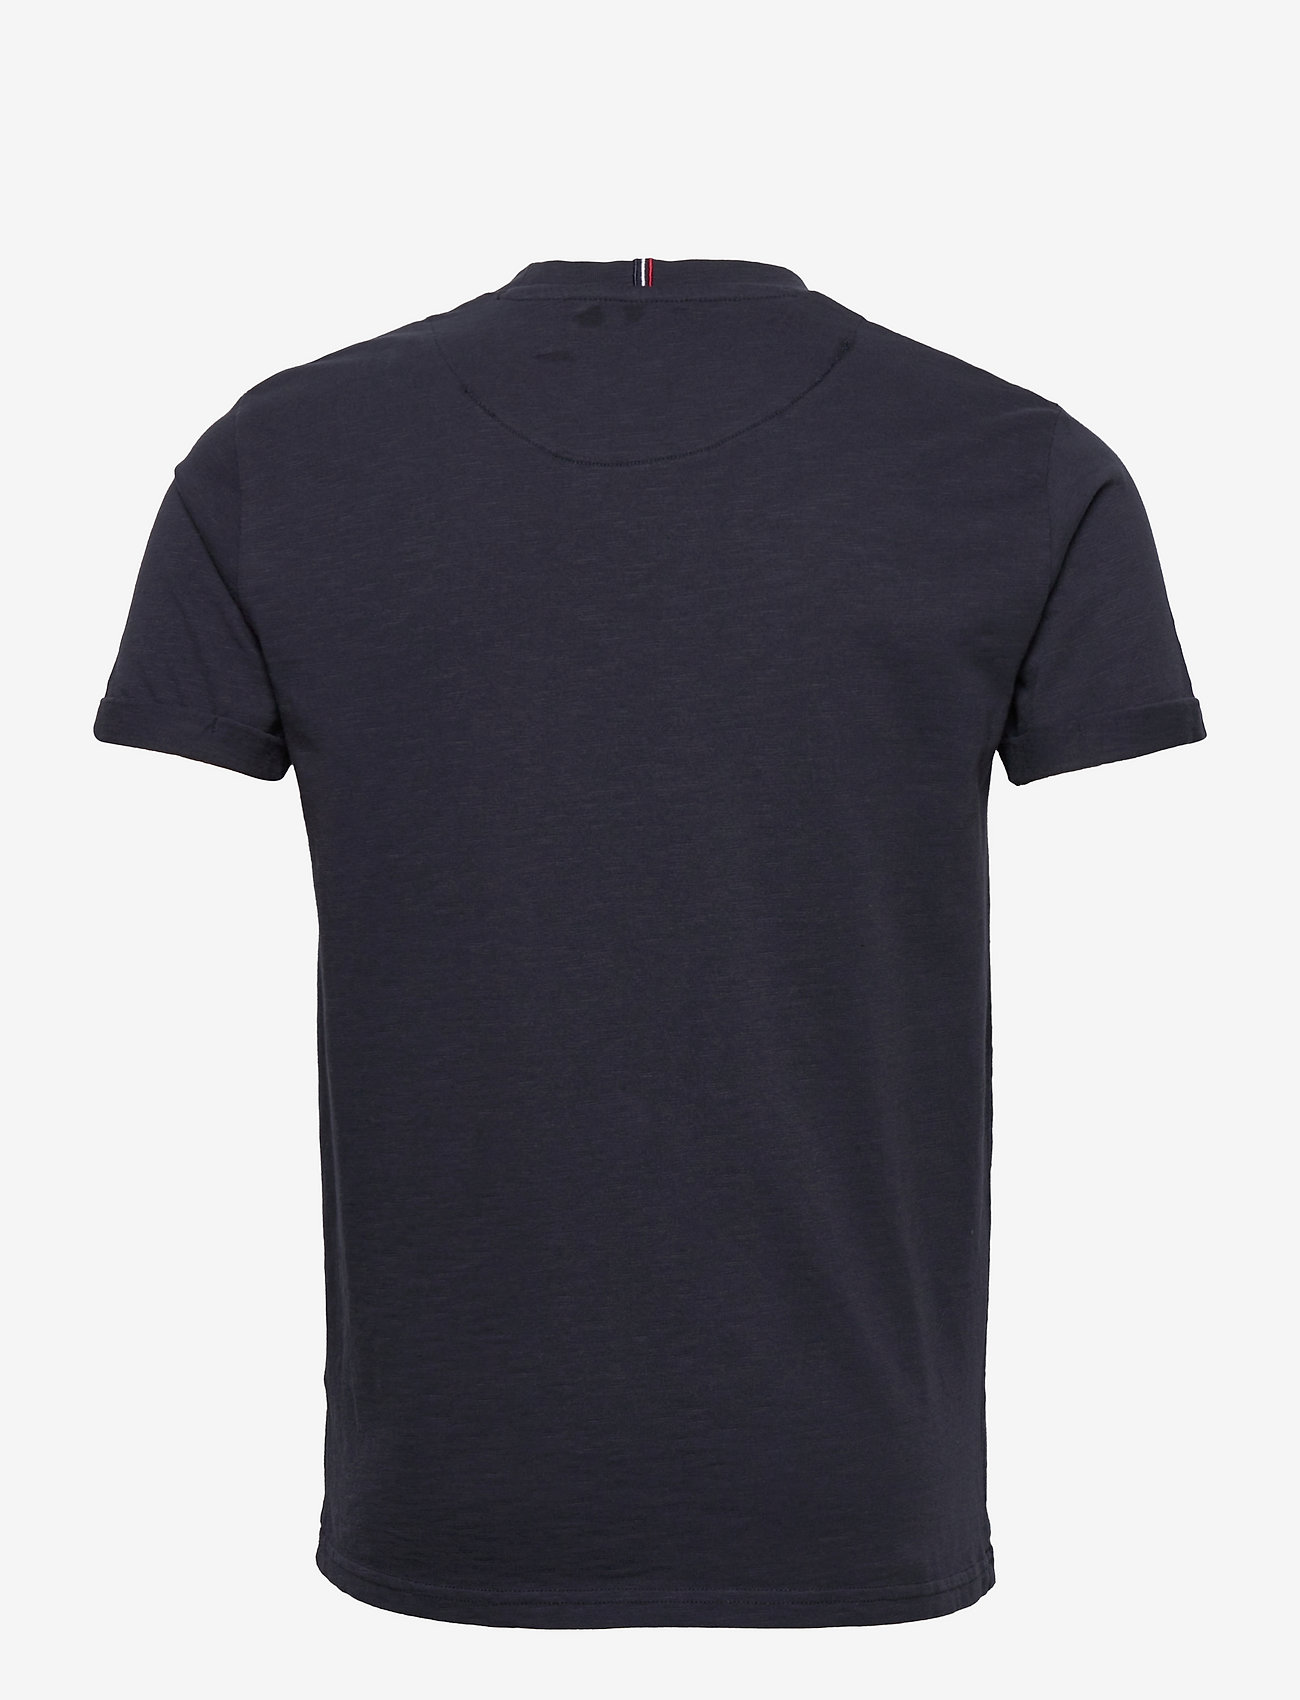 Les Deux - Amalfi T-Shirt - korte mouwen - dark navy/dust blue - 1